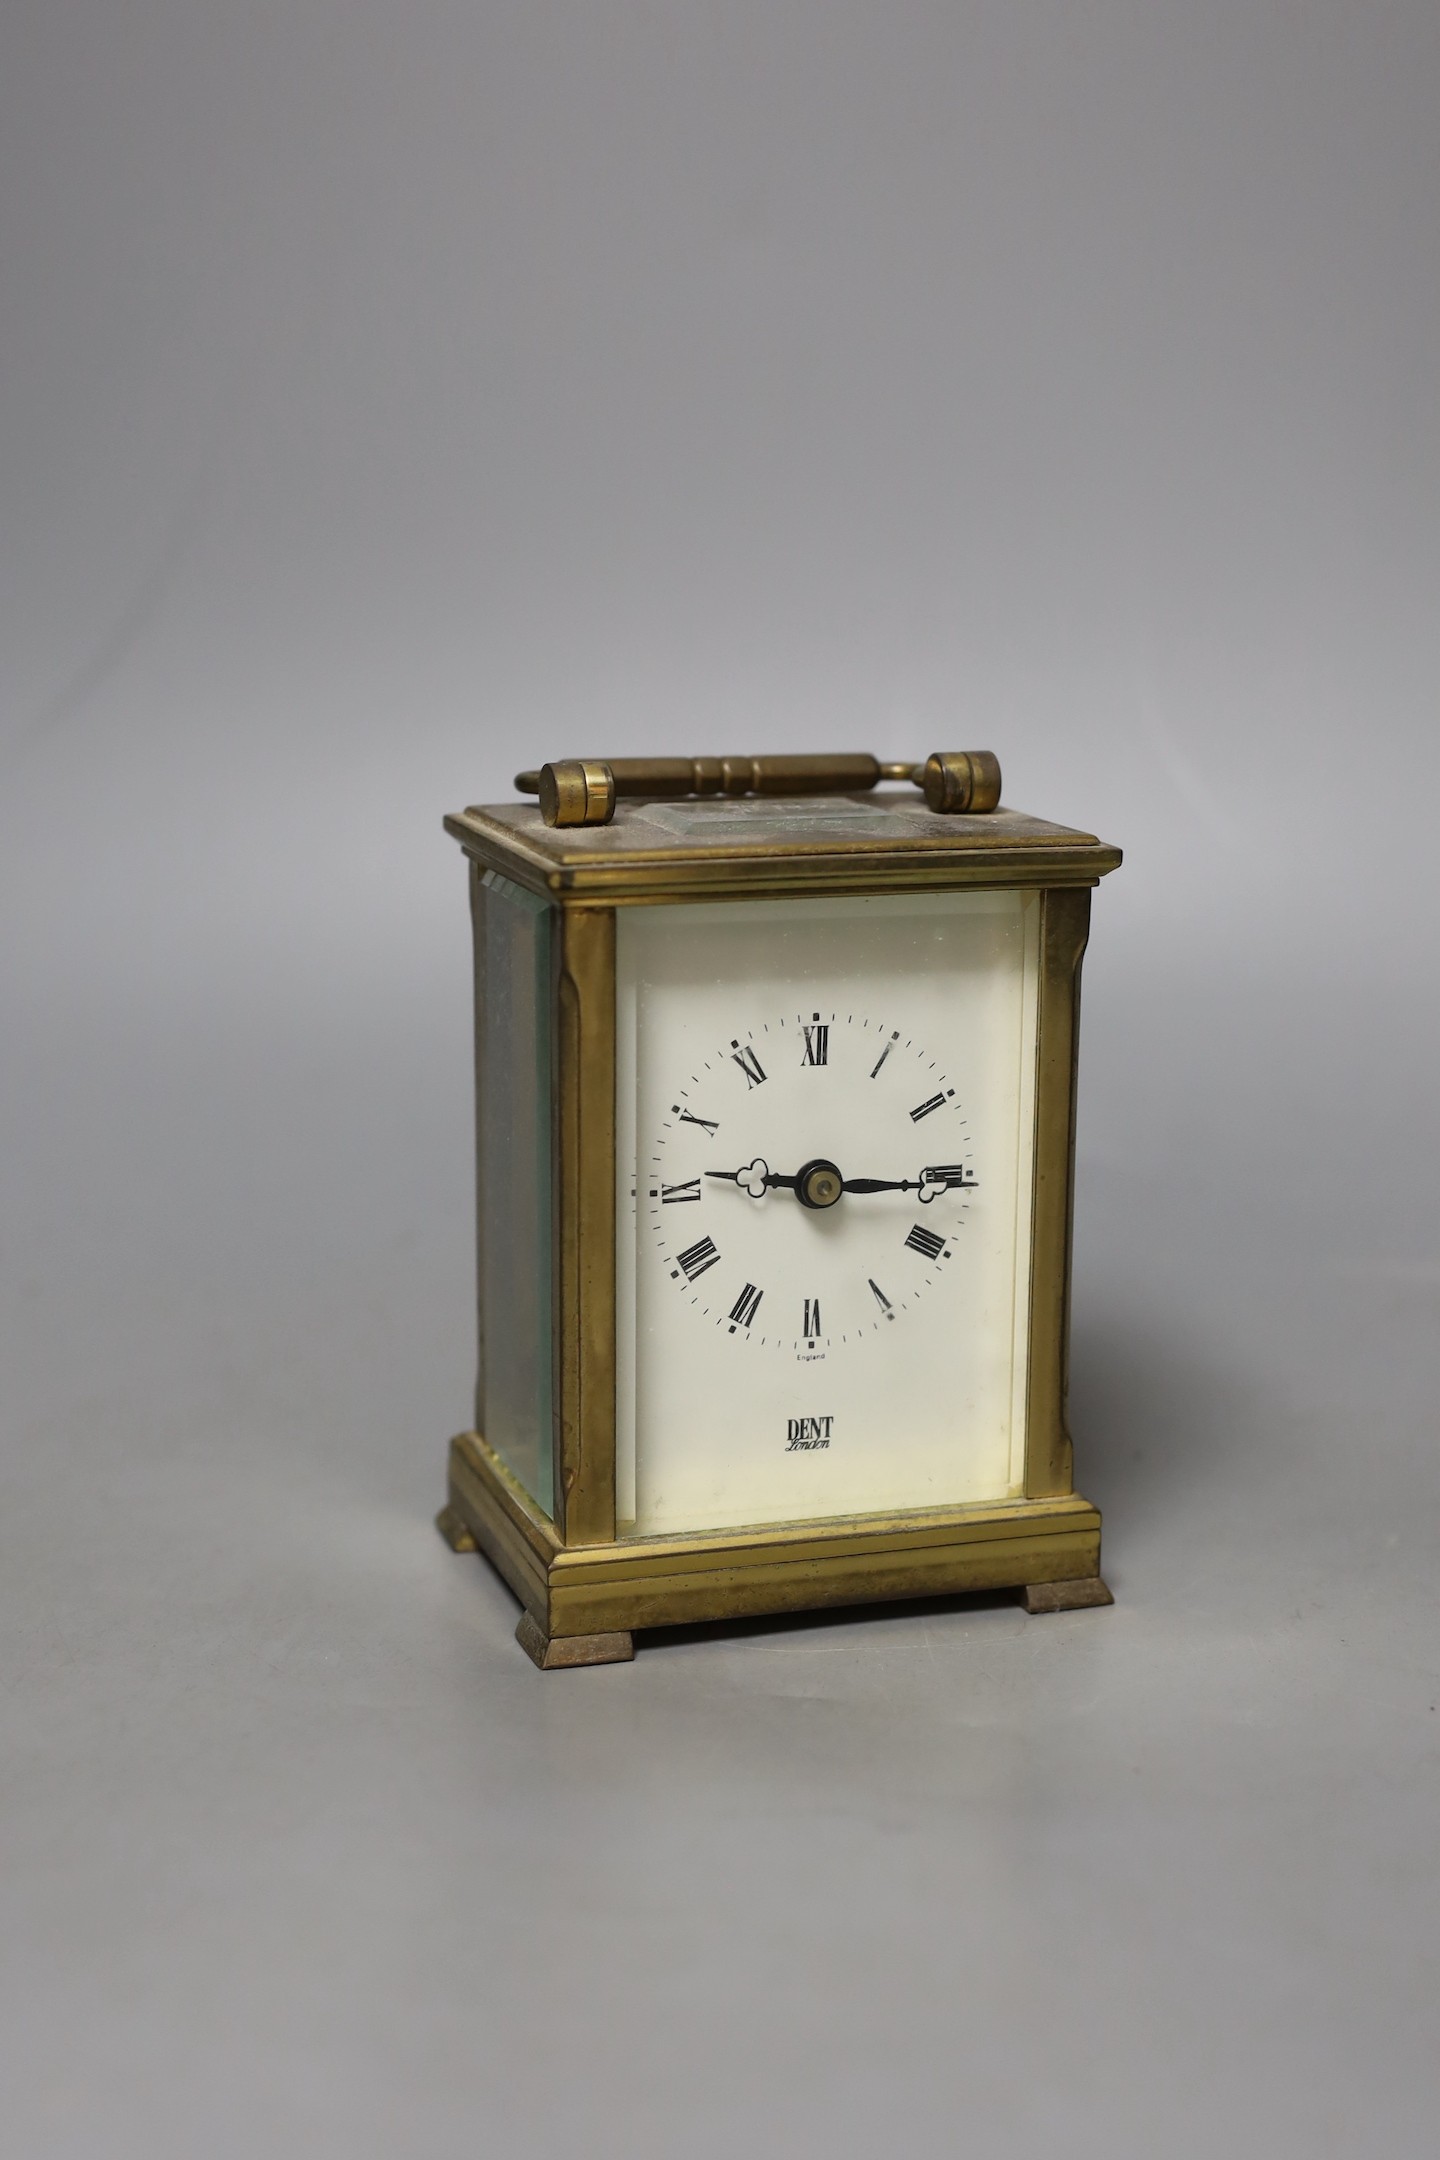 A Dent retailed brass carriage timepiece, 12 cms high.